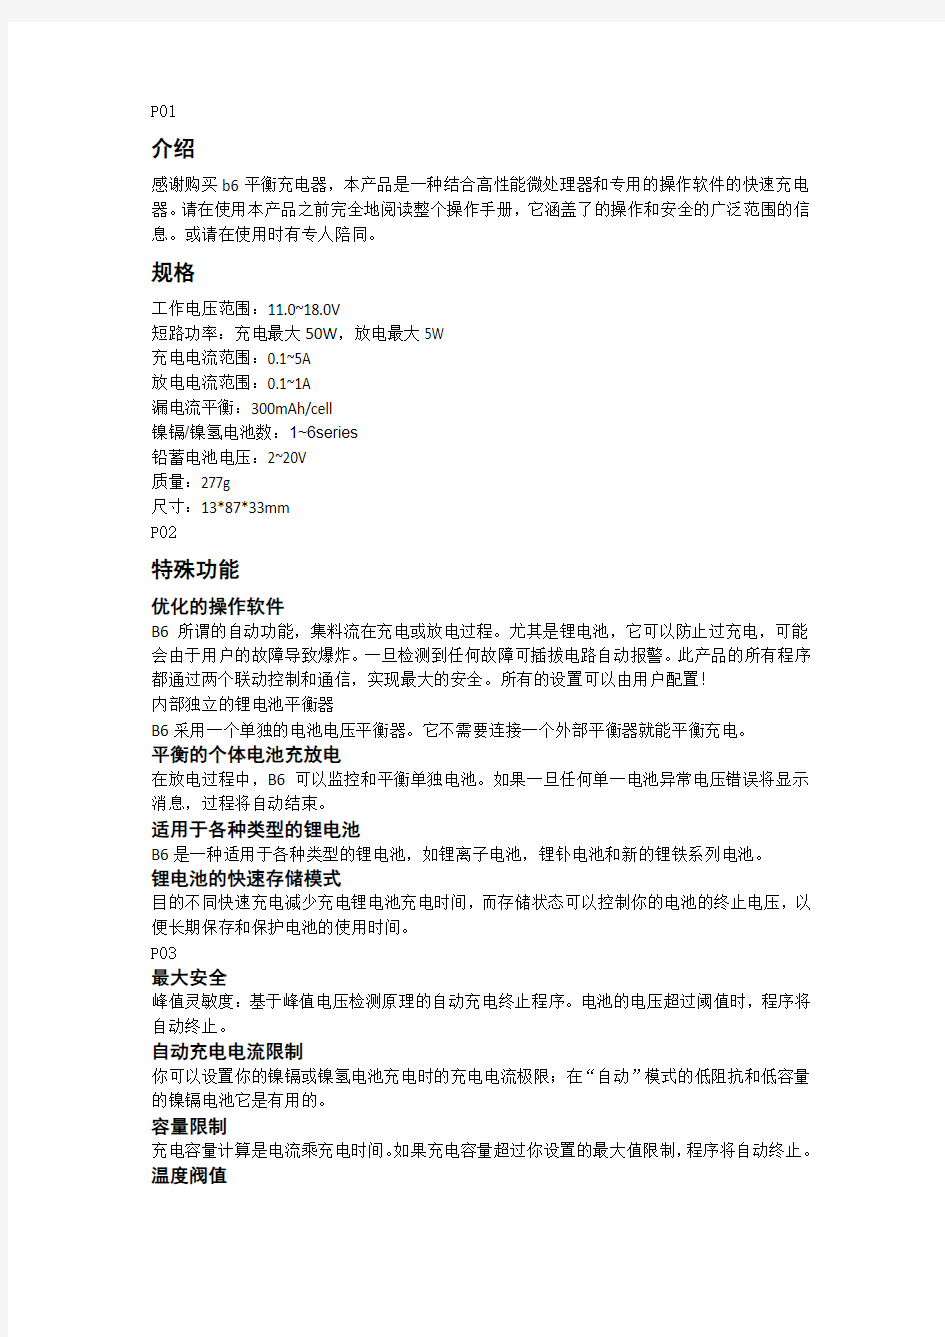 iMax B6充电器说明书中文翻译要点